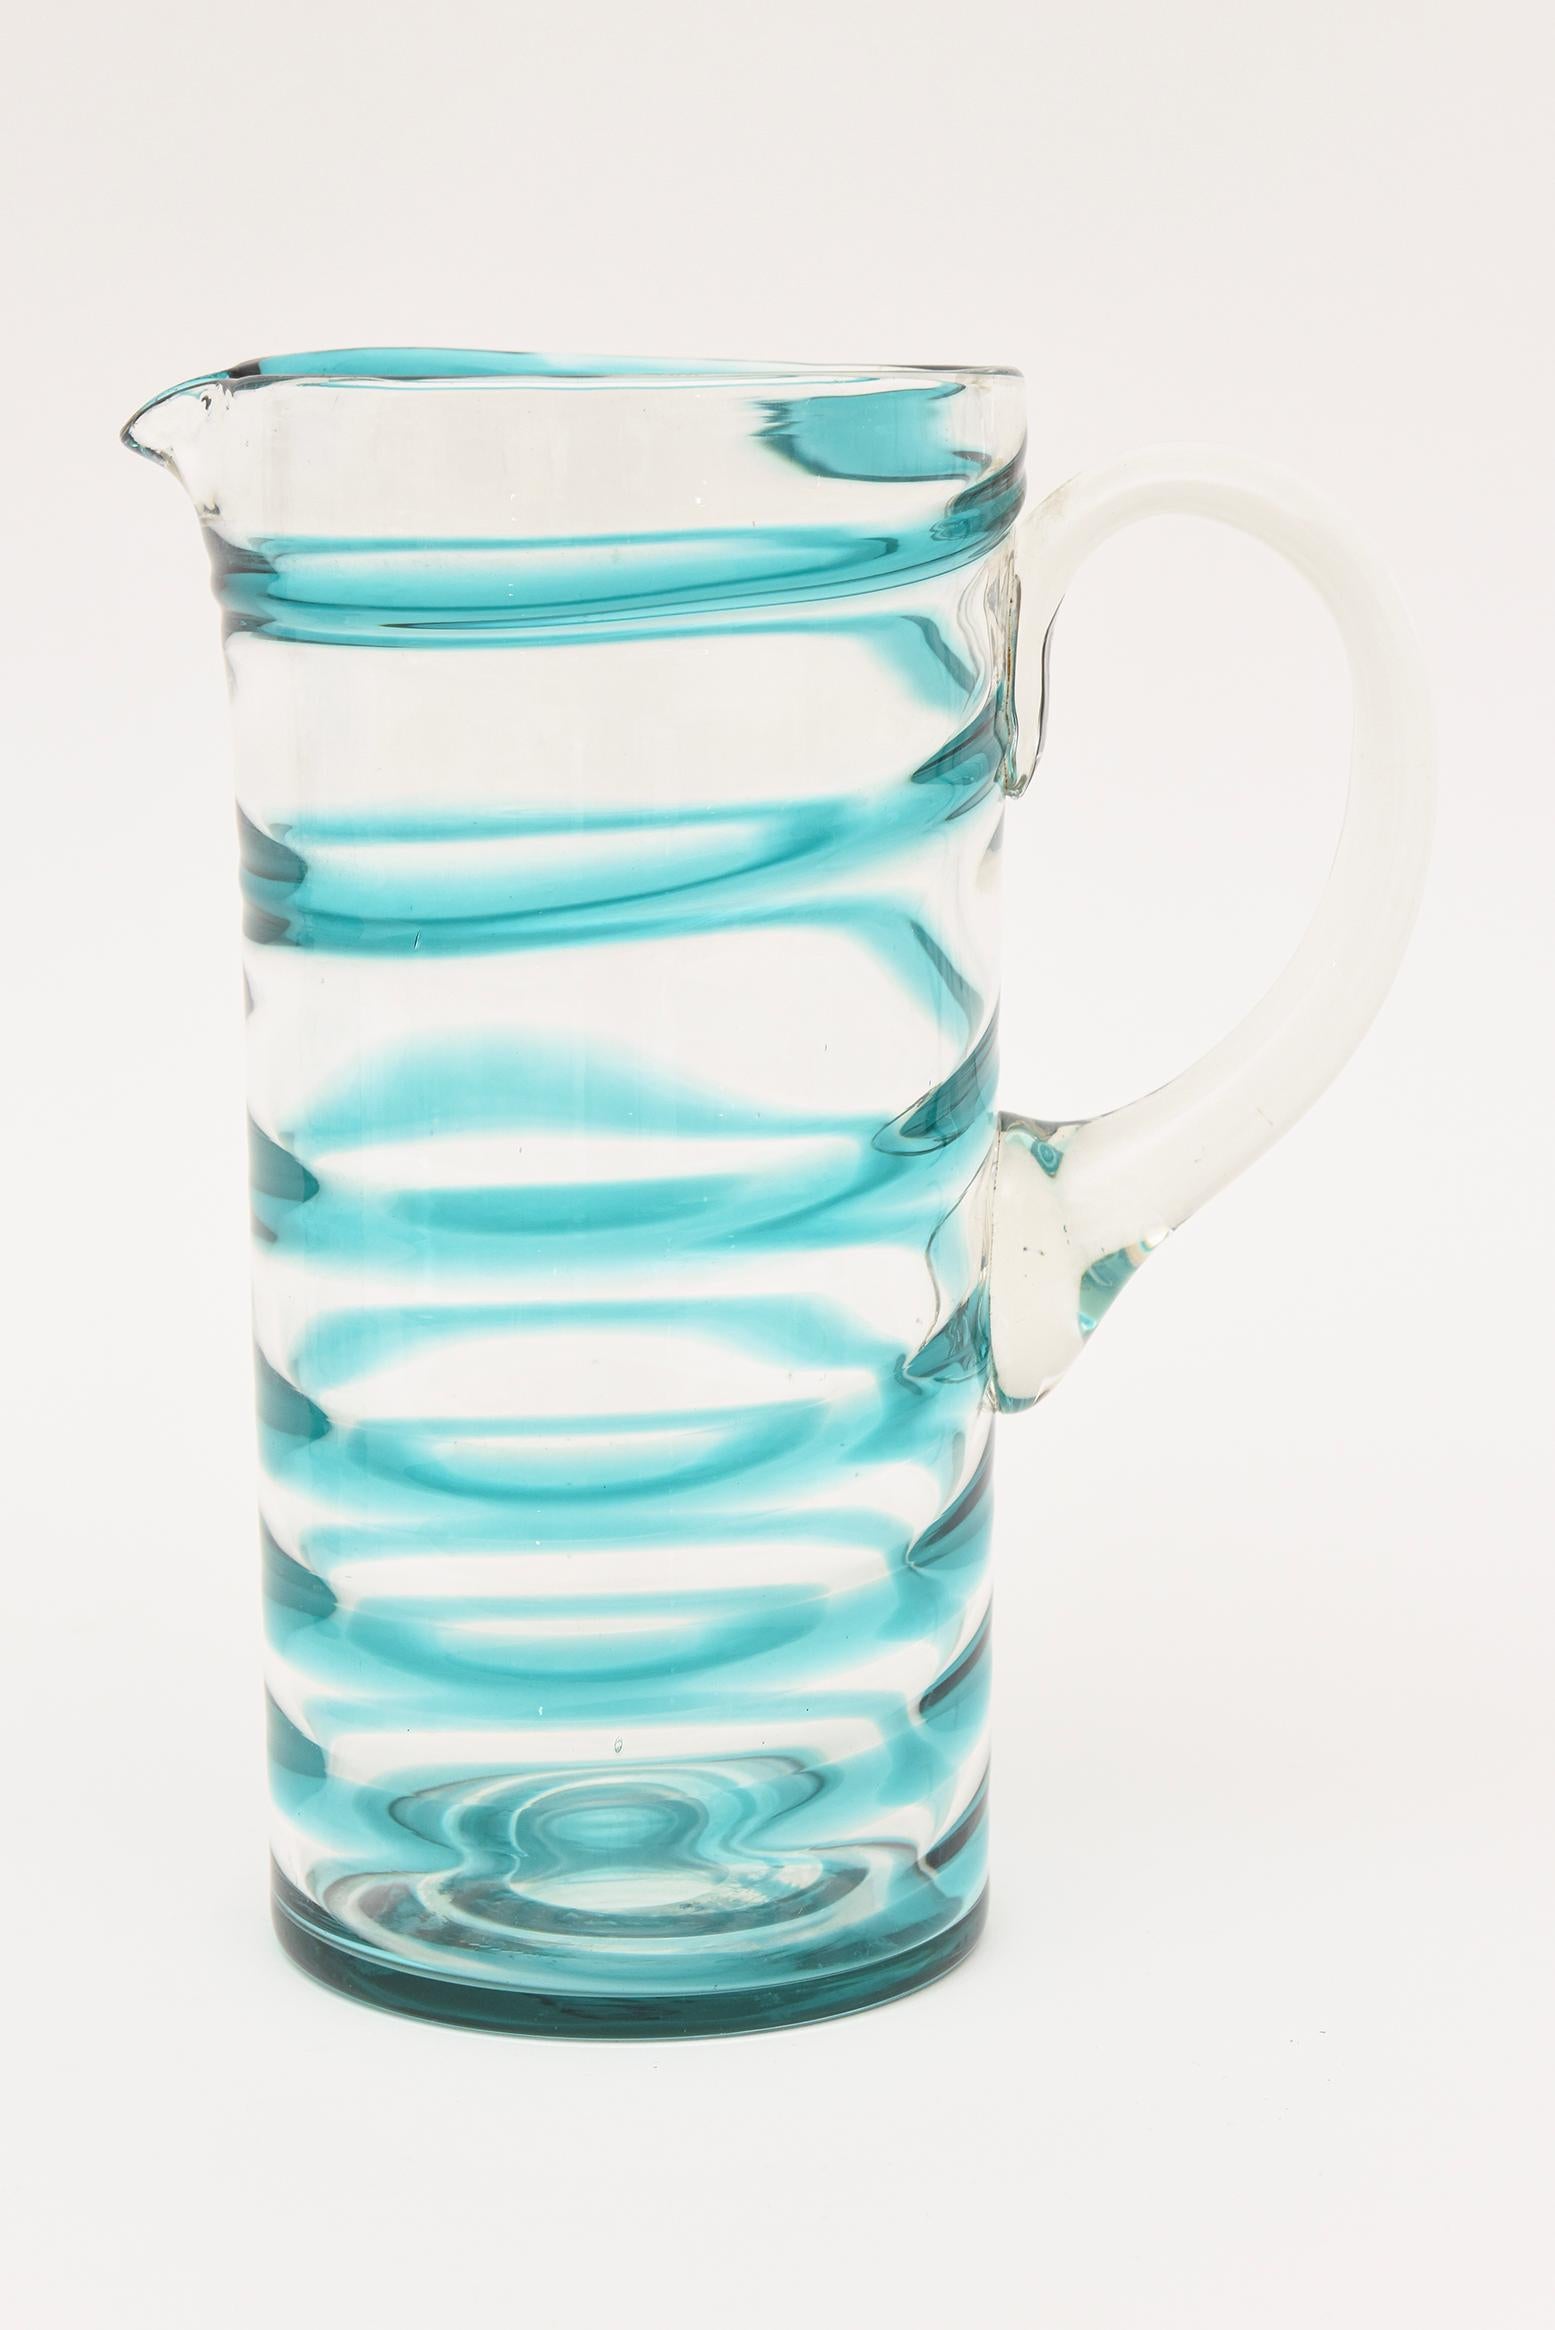 Blown Glass Murano Venini Turquoise Glass Swirled Ice Tea Or Lemonade Pitcher & Glasses Set For Sale